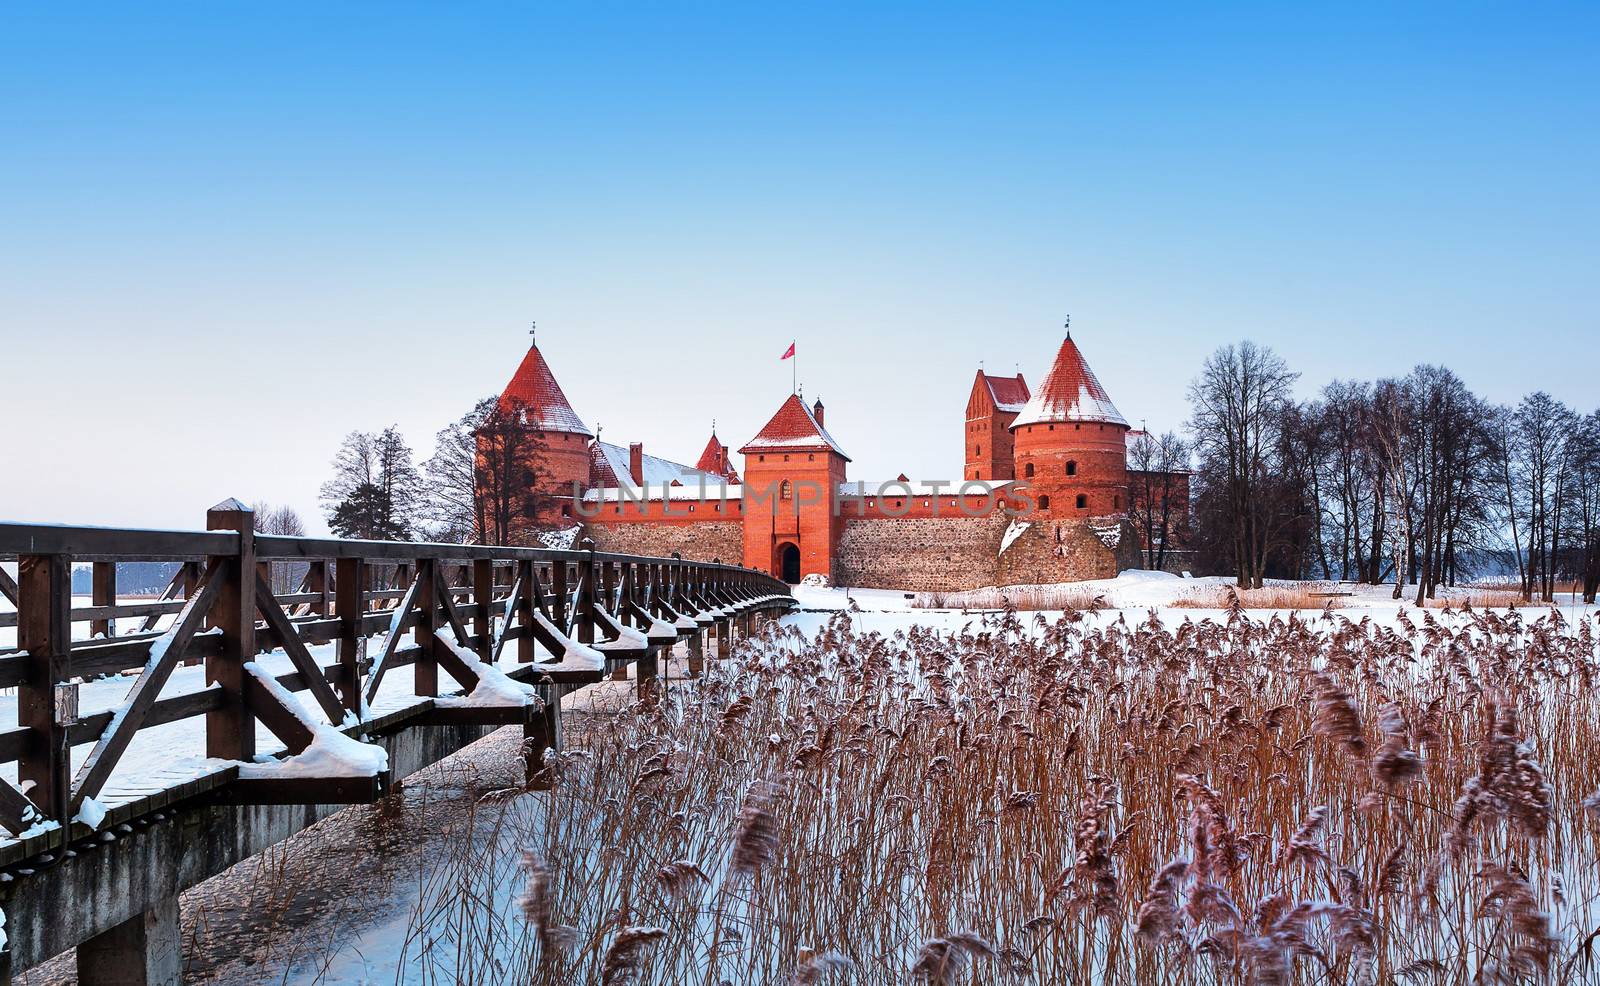 Trakai - historic city and lake resort in Lithuania by vladimir_sklyarov